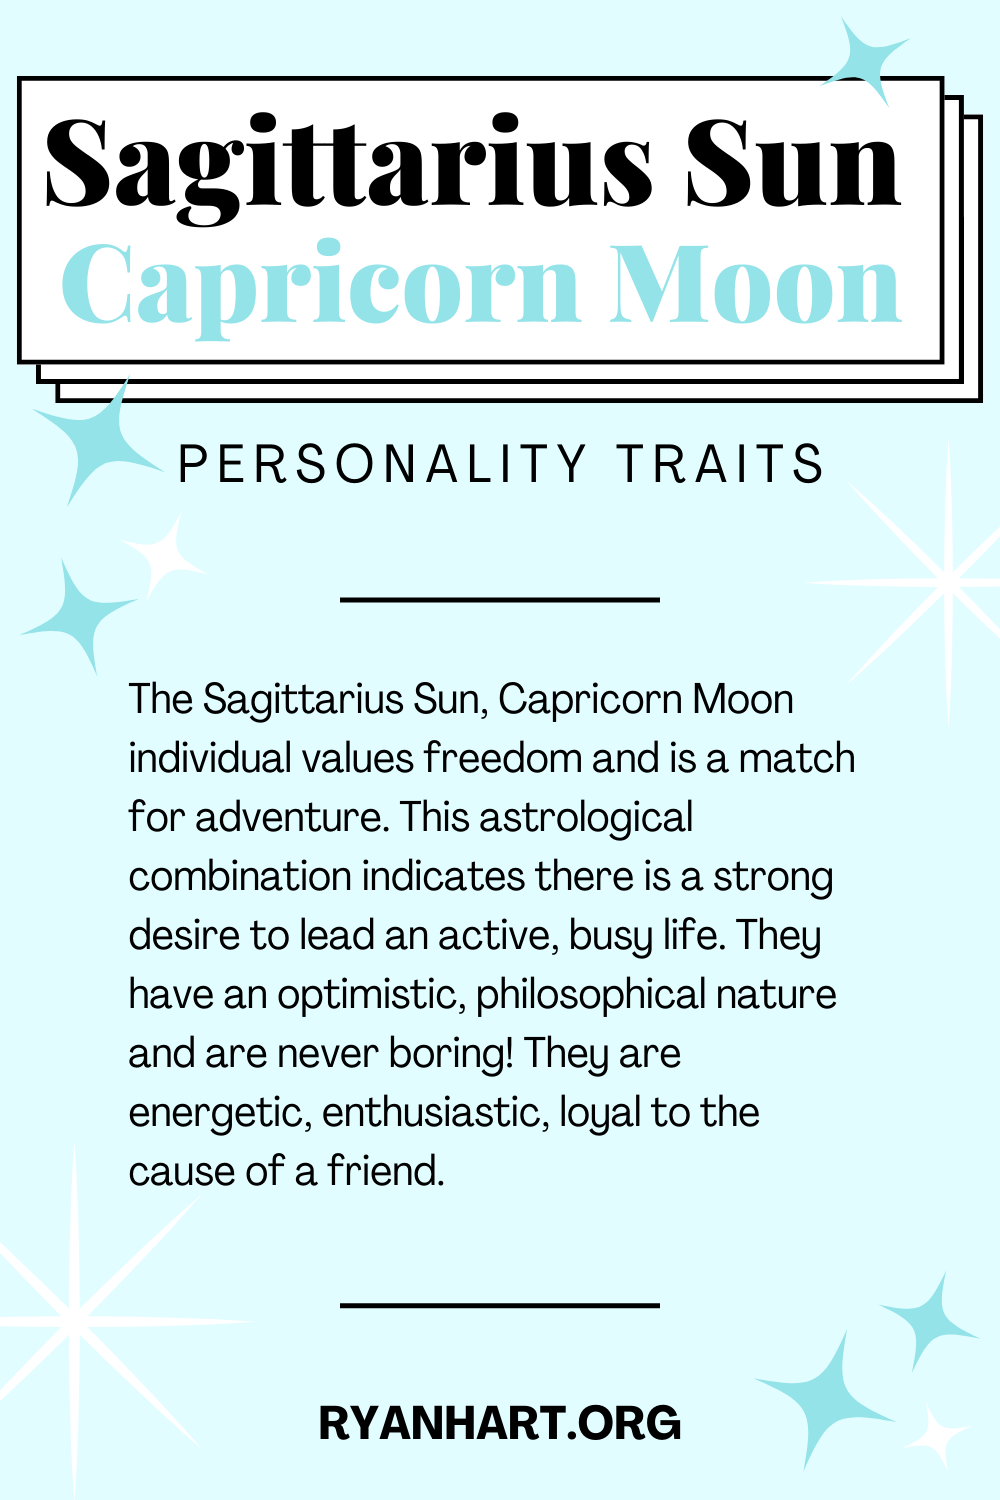 Sagittarius Sun Capricorn Moon Description